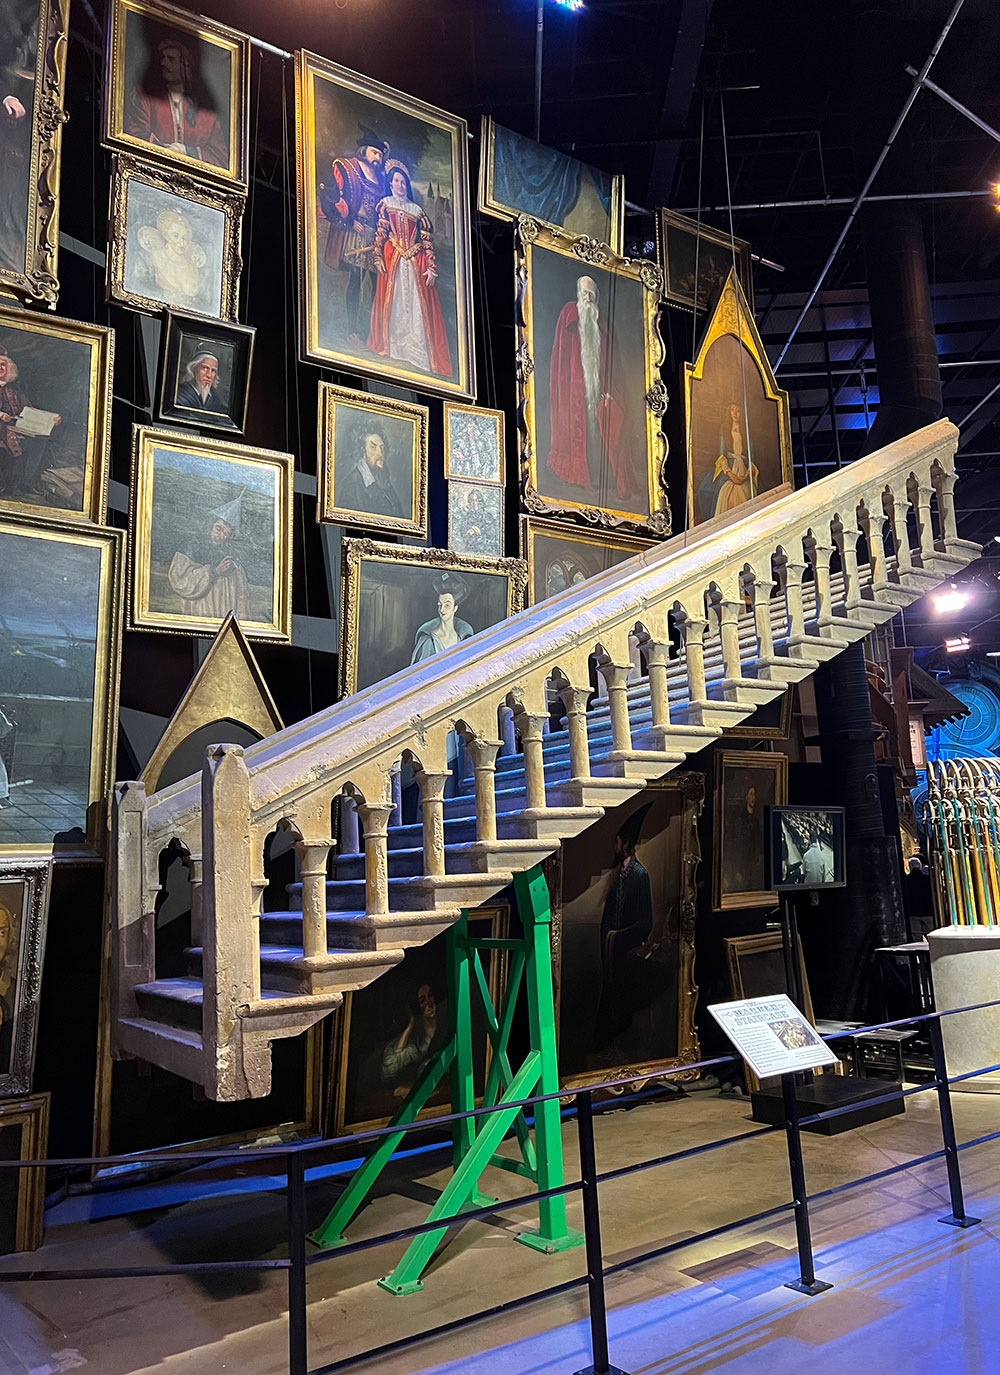 moving staircase at Hogwarts